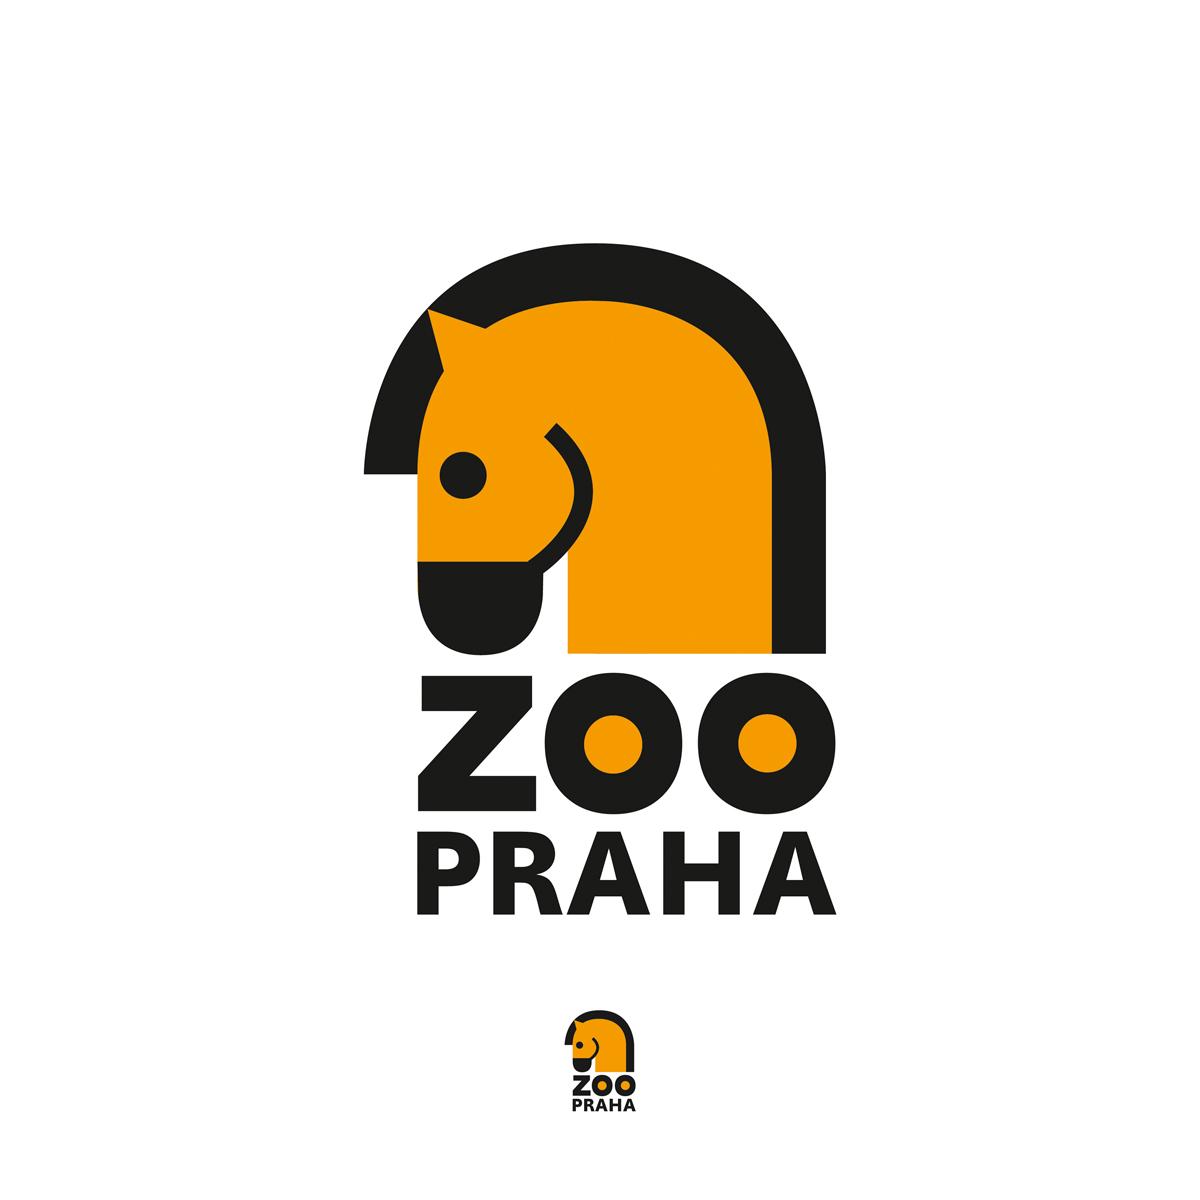 эмблема зоопарка